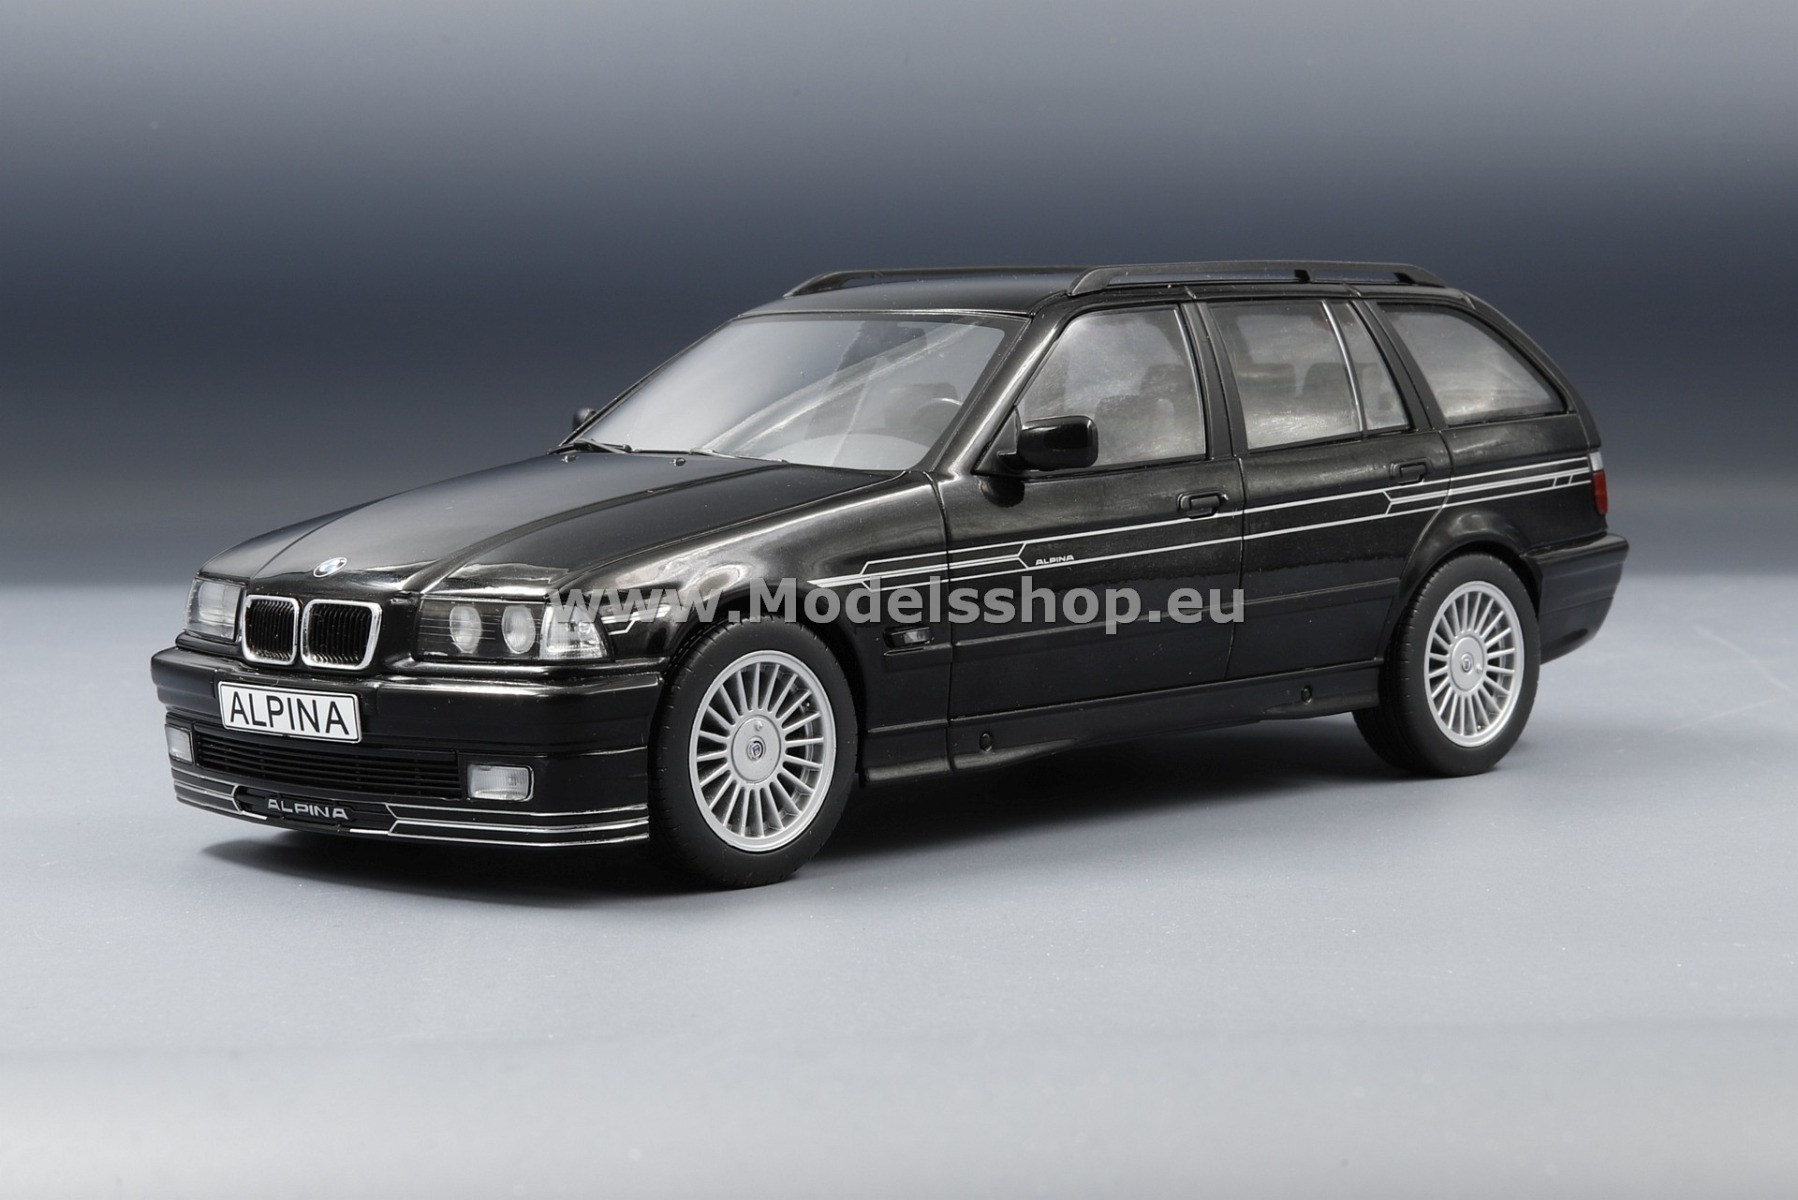 MCG 18228 BMW Alpina B3 3.2 Touring, Basis: E36, 1995 /black metallic/